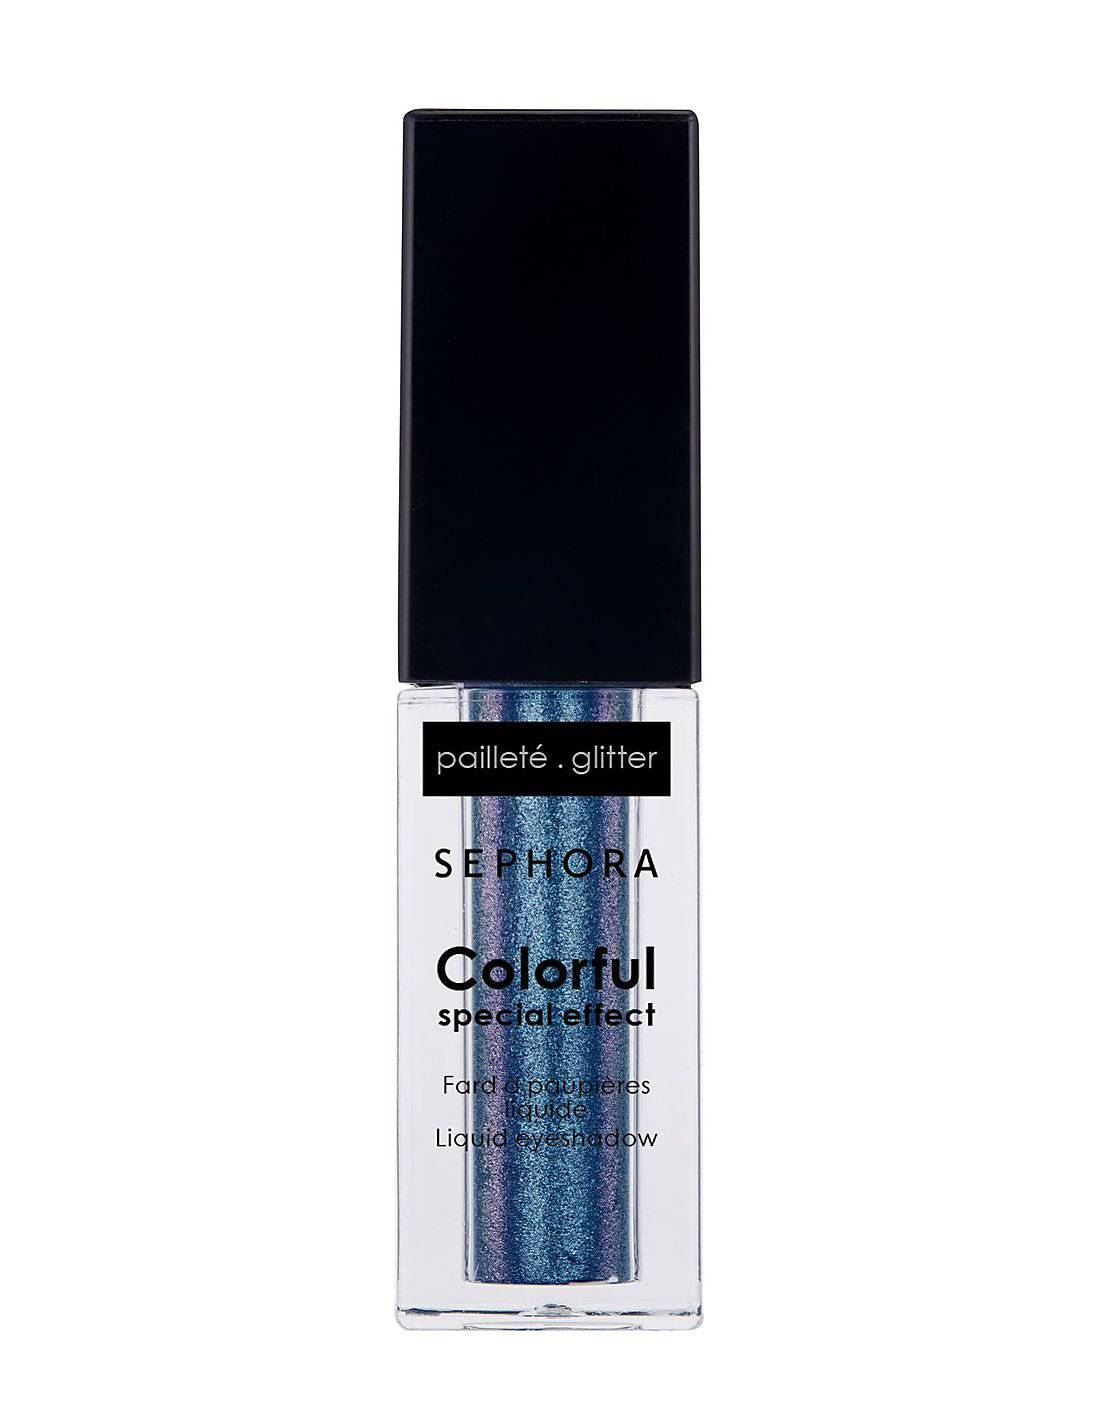 Sephora Colorful Special Effect Ombretto Liquido - Jasmine Parfums- [ean]